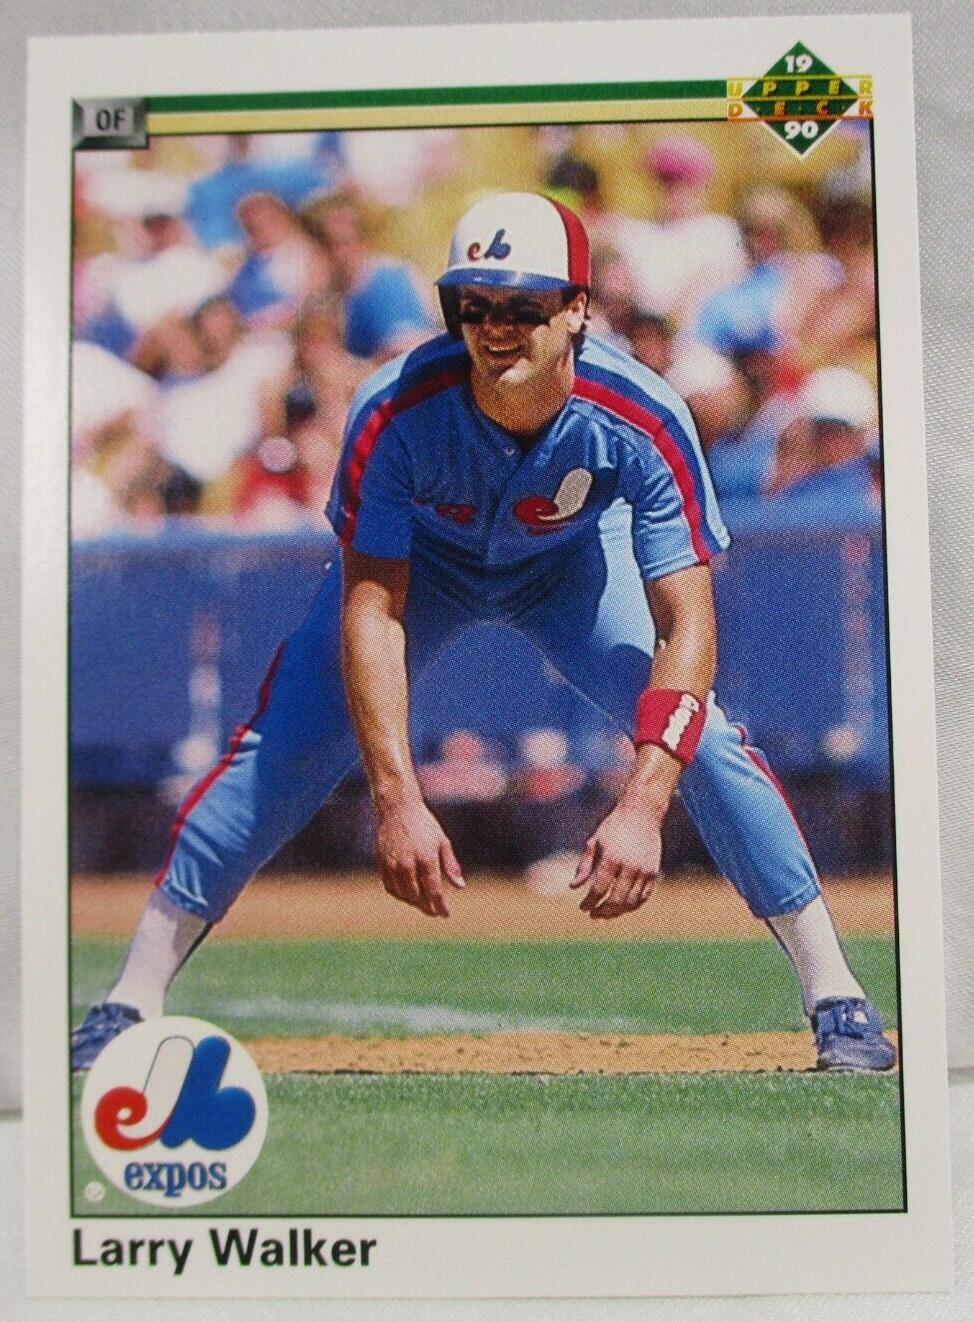 1990 Upper Deck Baseball Larry Walker Rookie Card #466 (004)